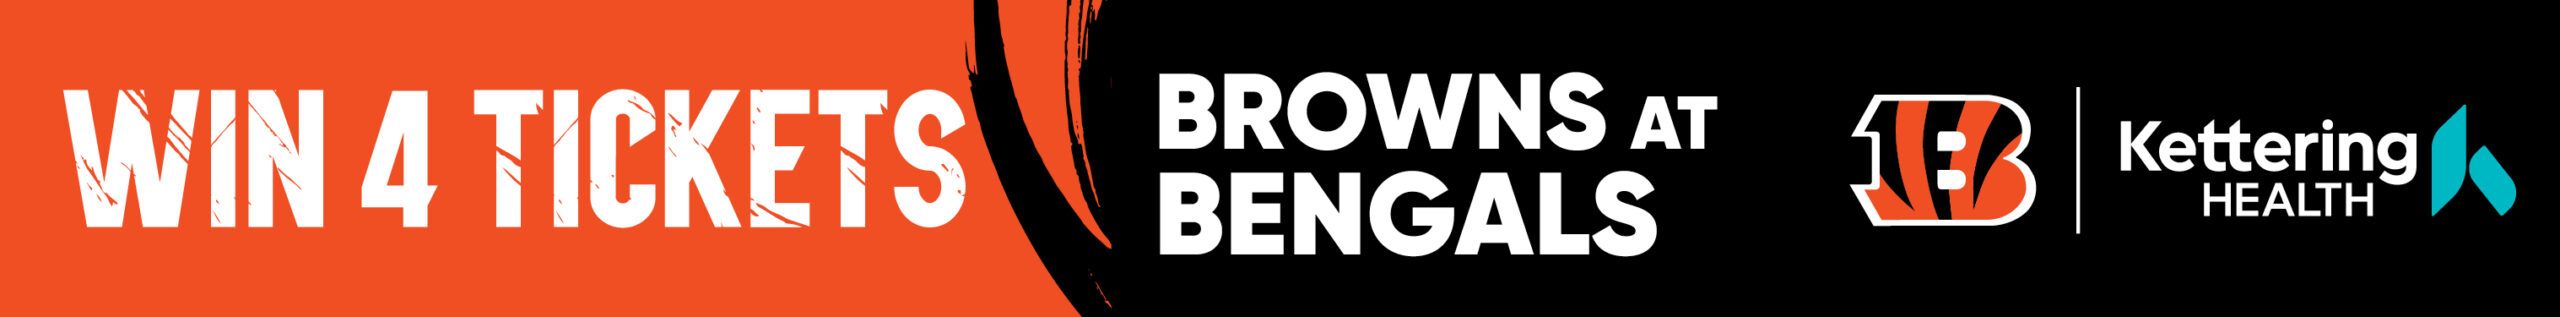 bengals browns tickets